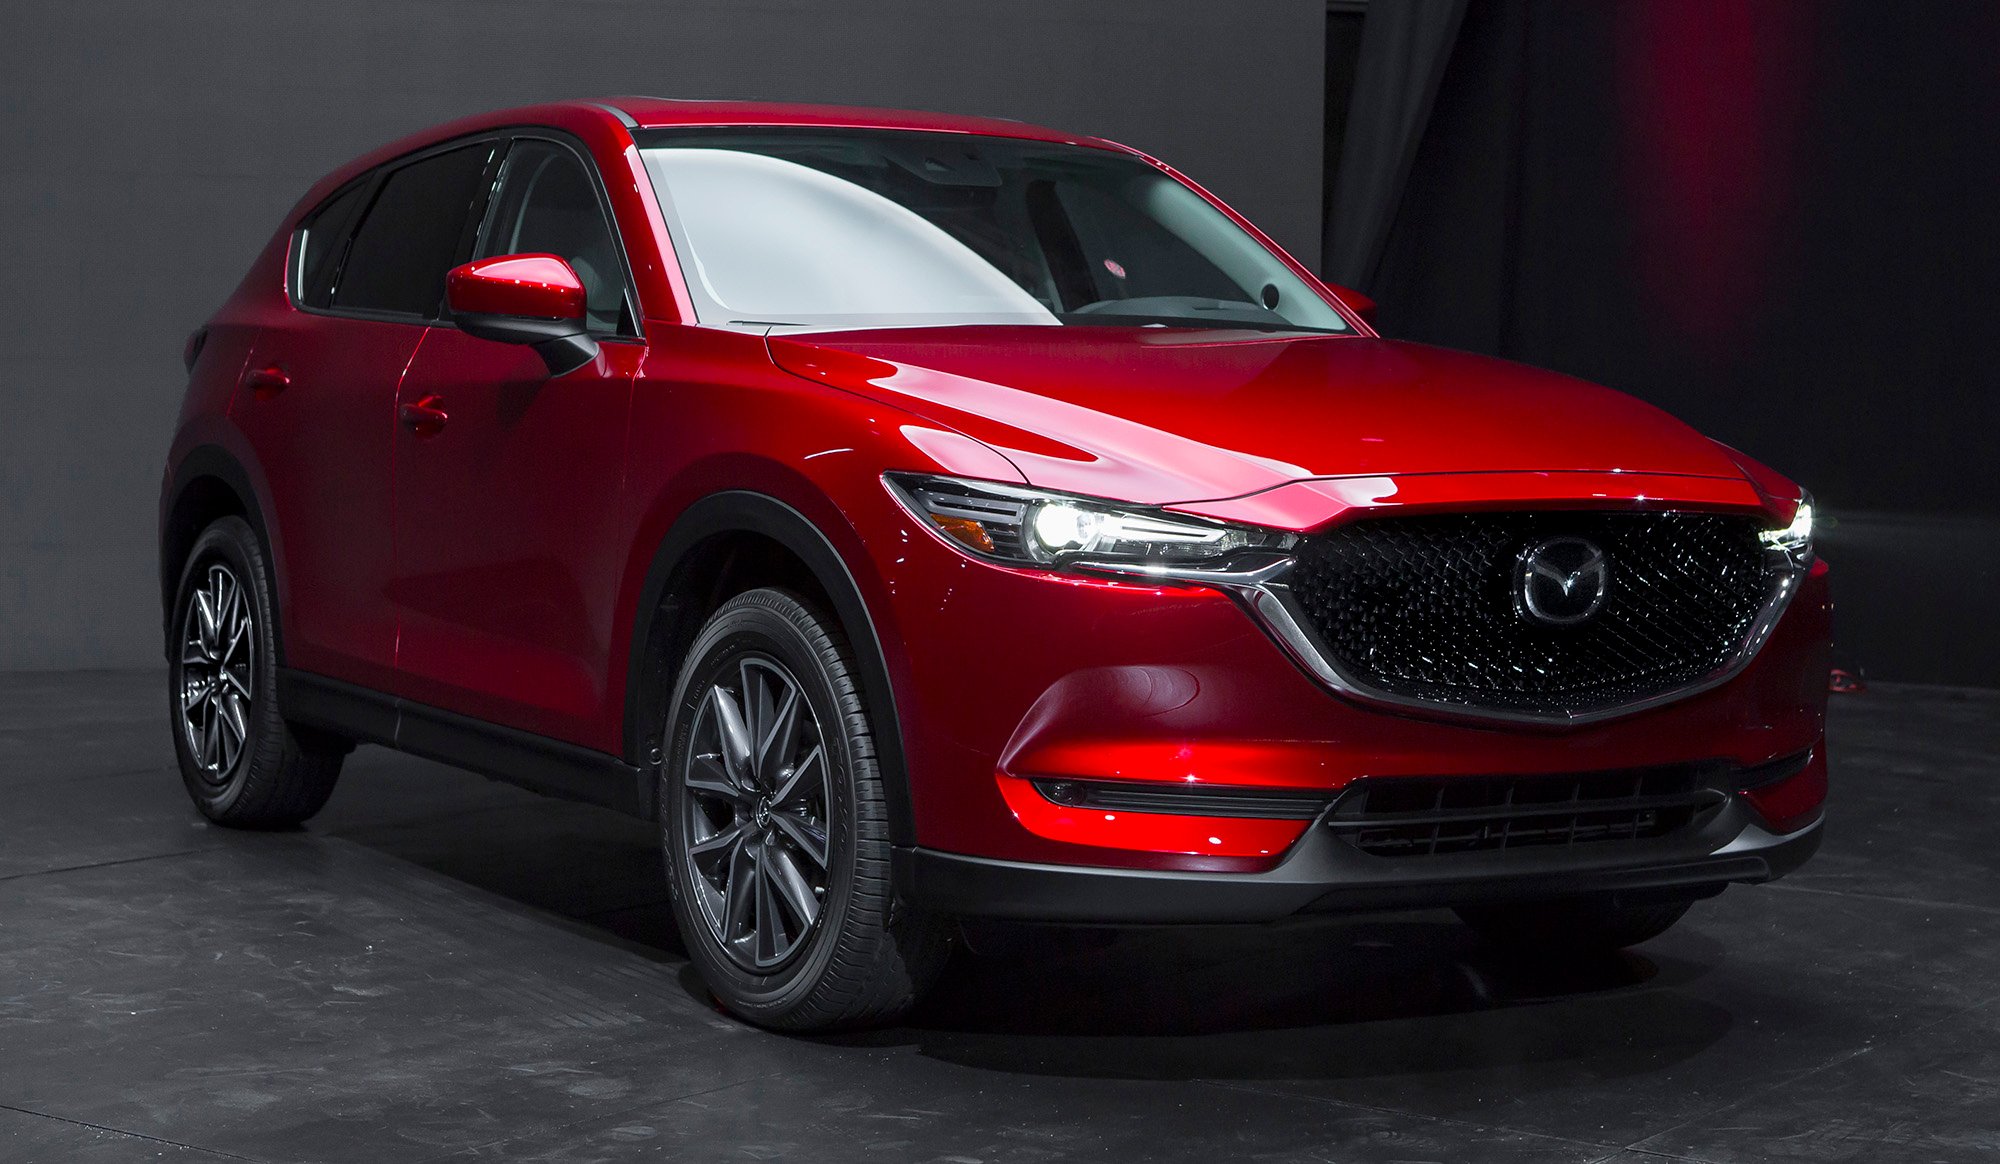 2017 Mazda CX-5 unveiled in LA - photos | CarAdvice